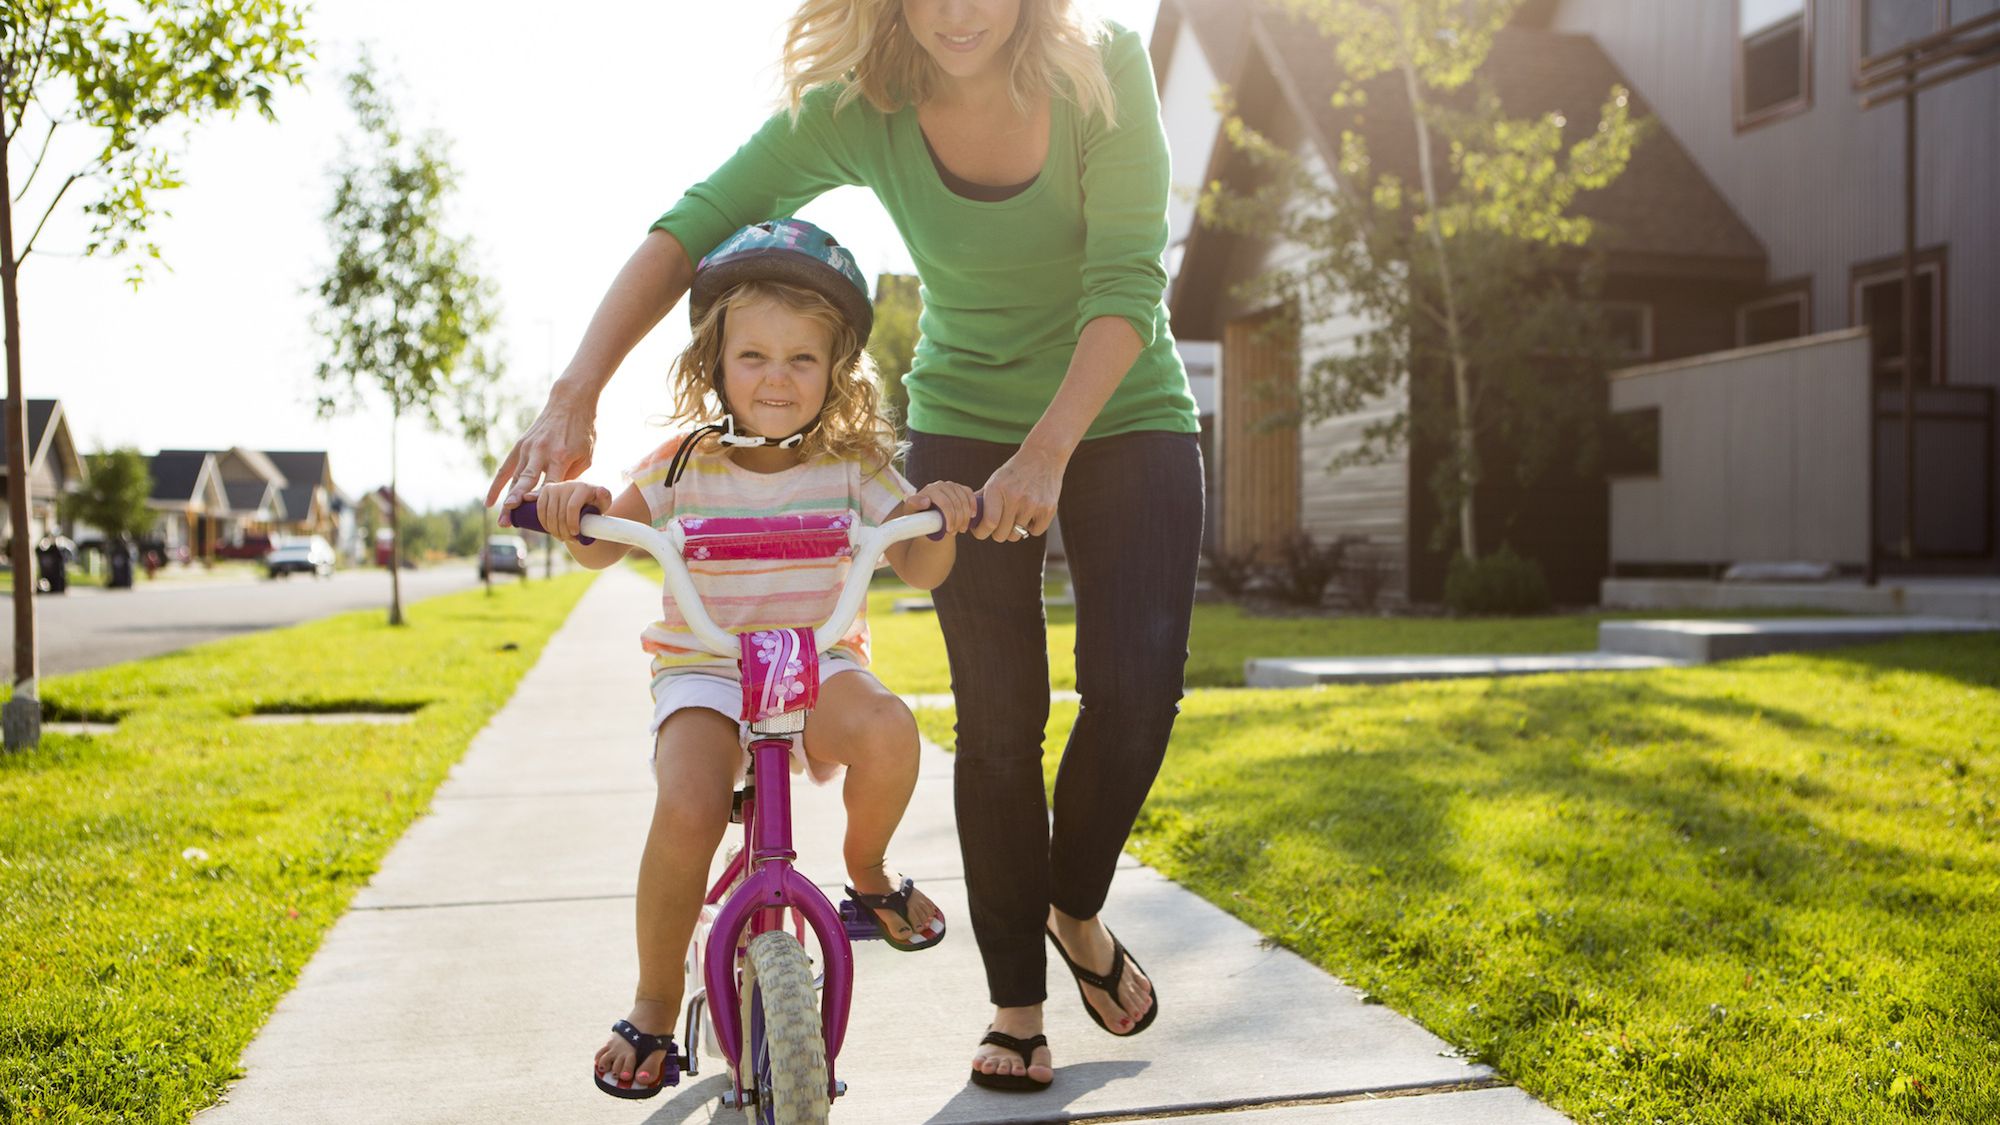 She her bike when she her. Дети с велосипедом. Езда на велосипеде дети. Дети катаются на велосипеде. Учит кататься на велосипеде.